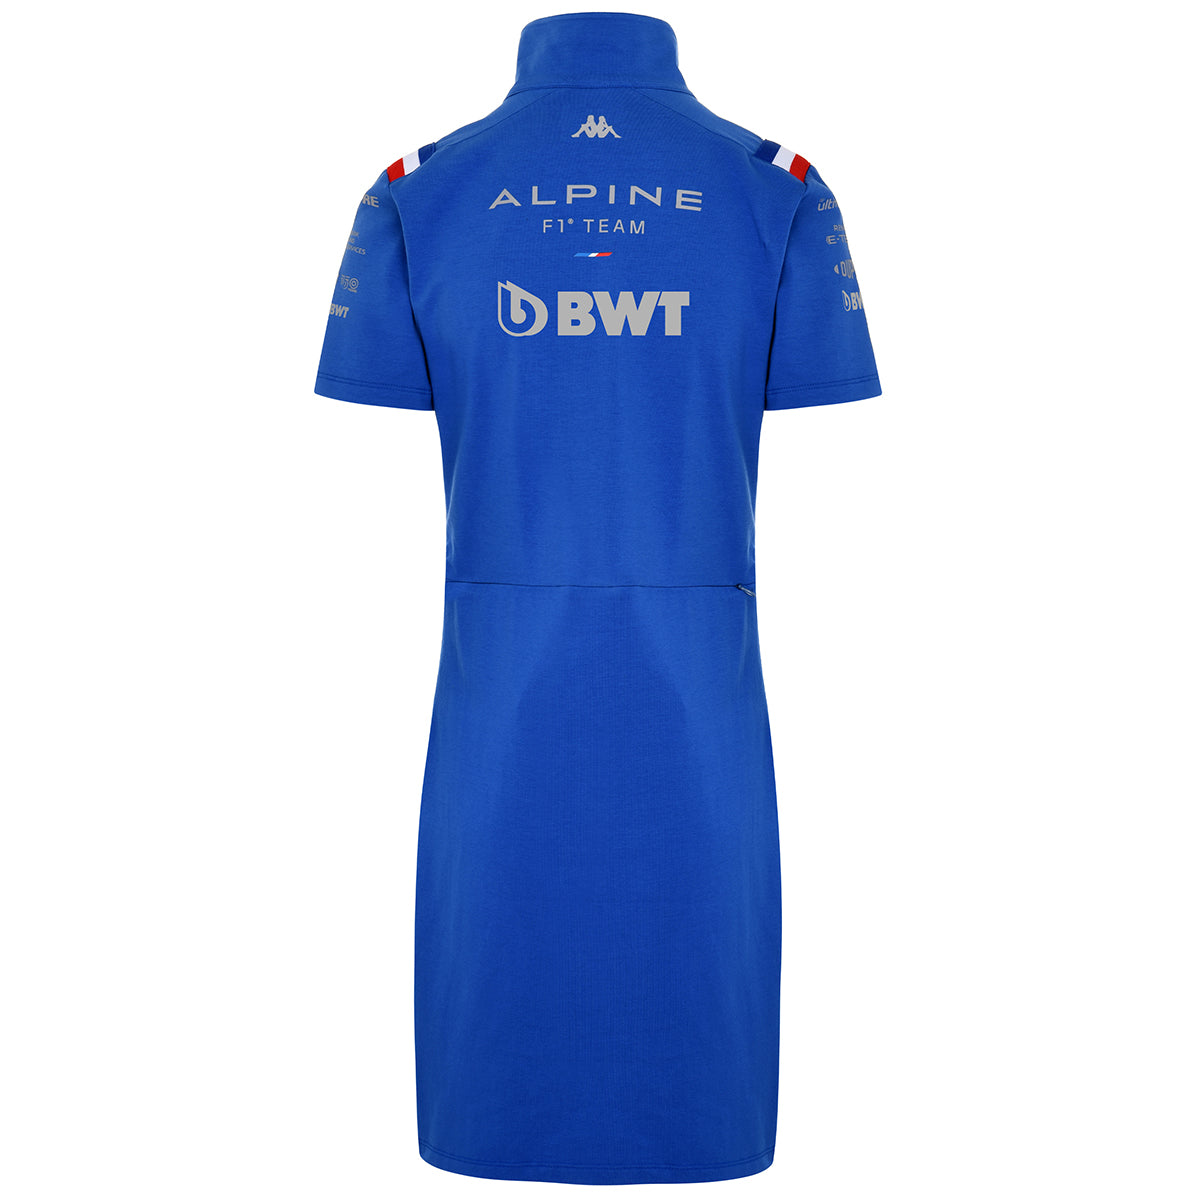 Vestido Arukif BWT Alpine F1 Team Azul Mujer - imagen 3